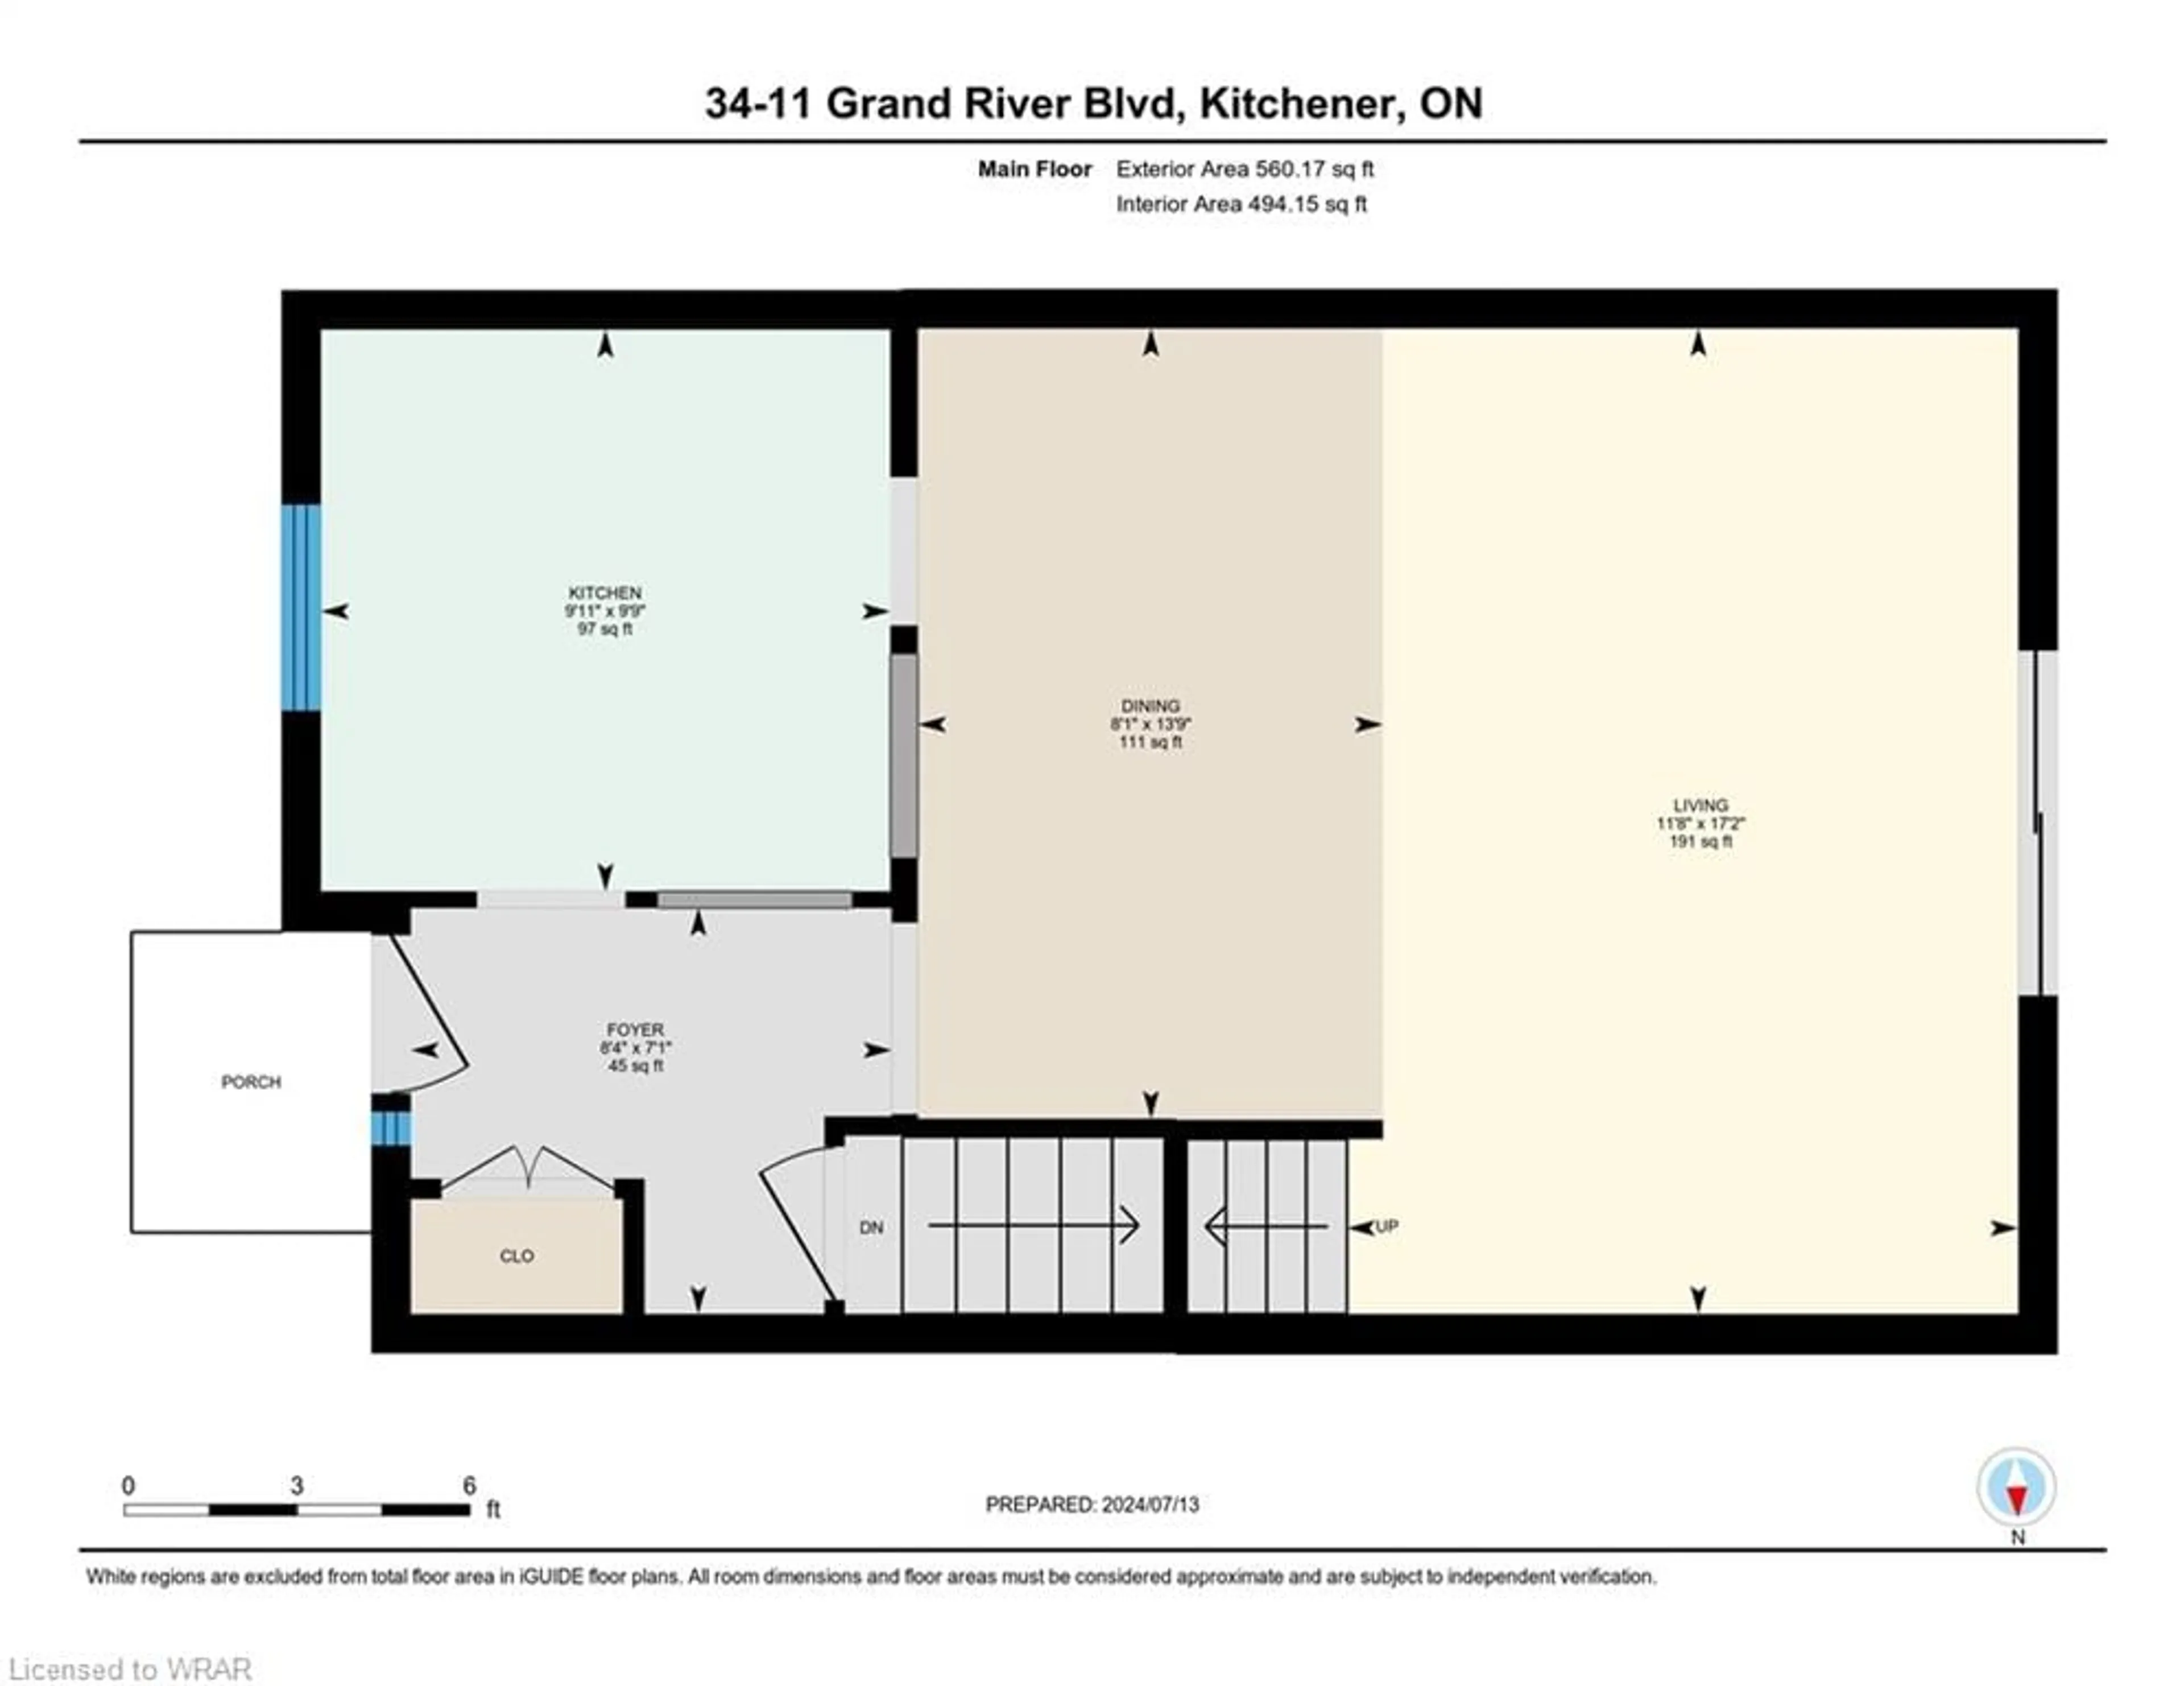 Floor plan for 11 Grand River Blvd #34, Kitchener Ontario N2A 2T2